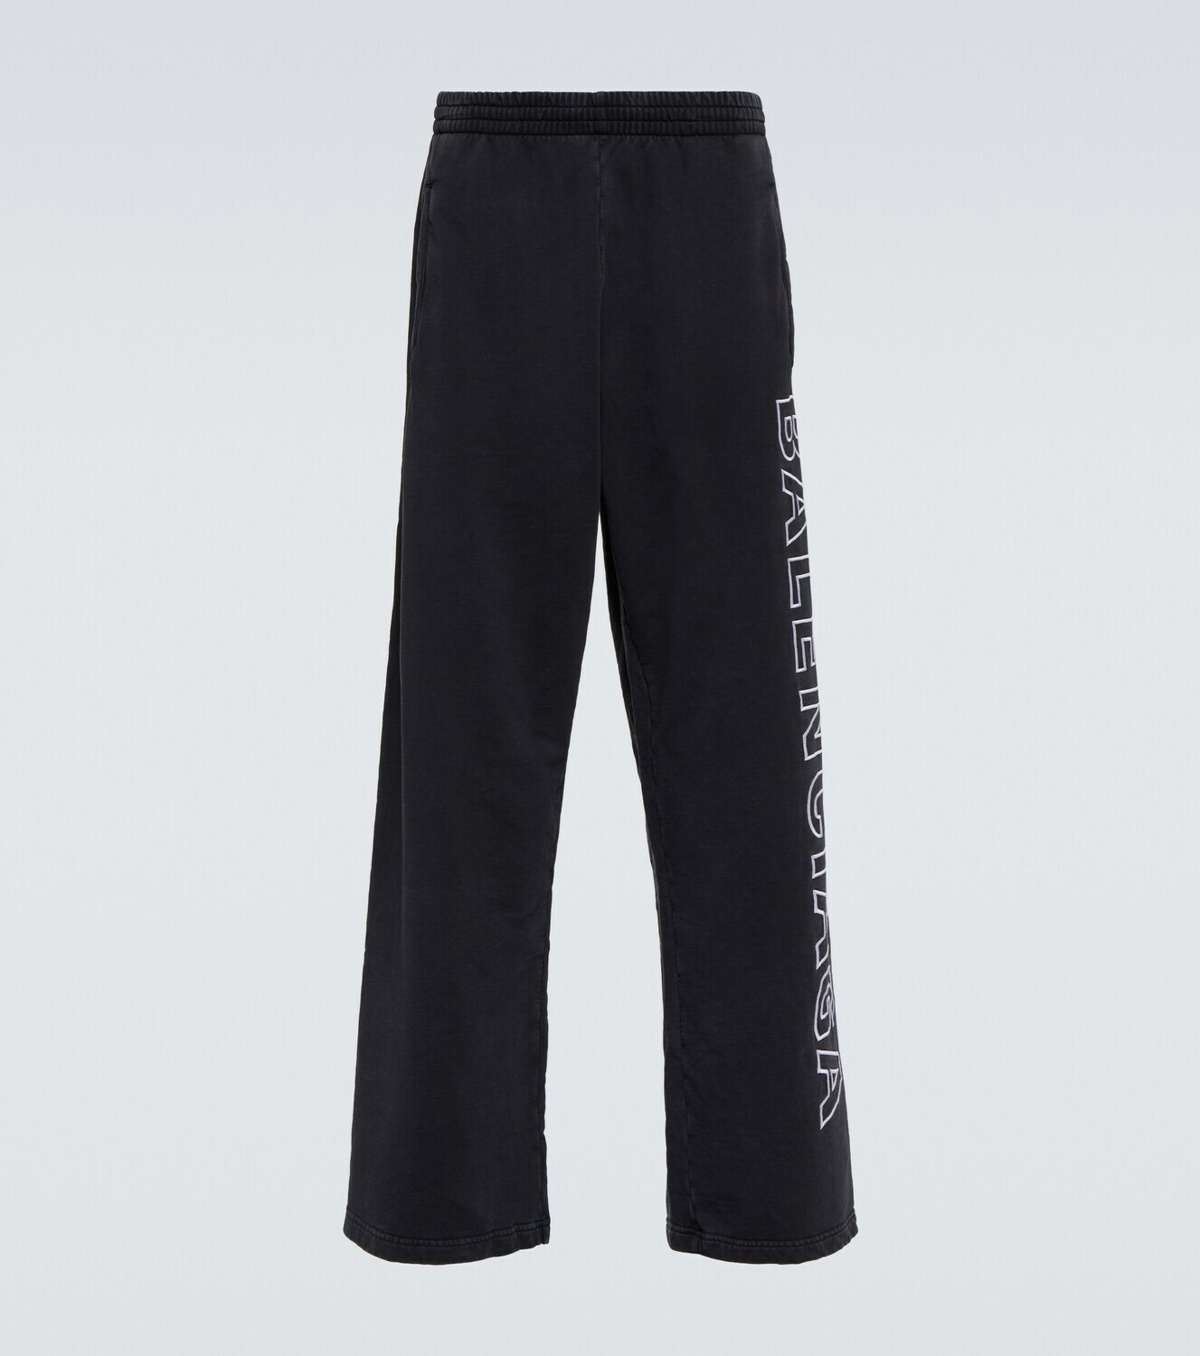 Balenciaga Baggy Sweatpants in Black for Men